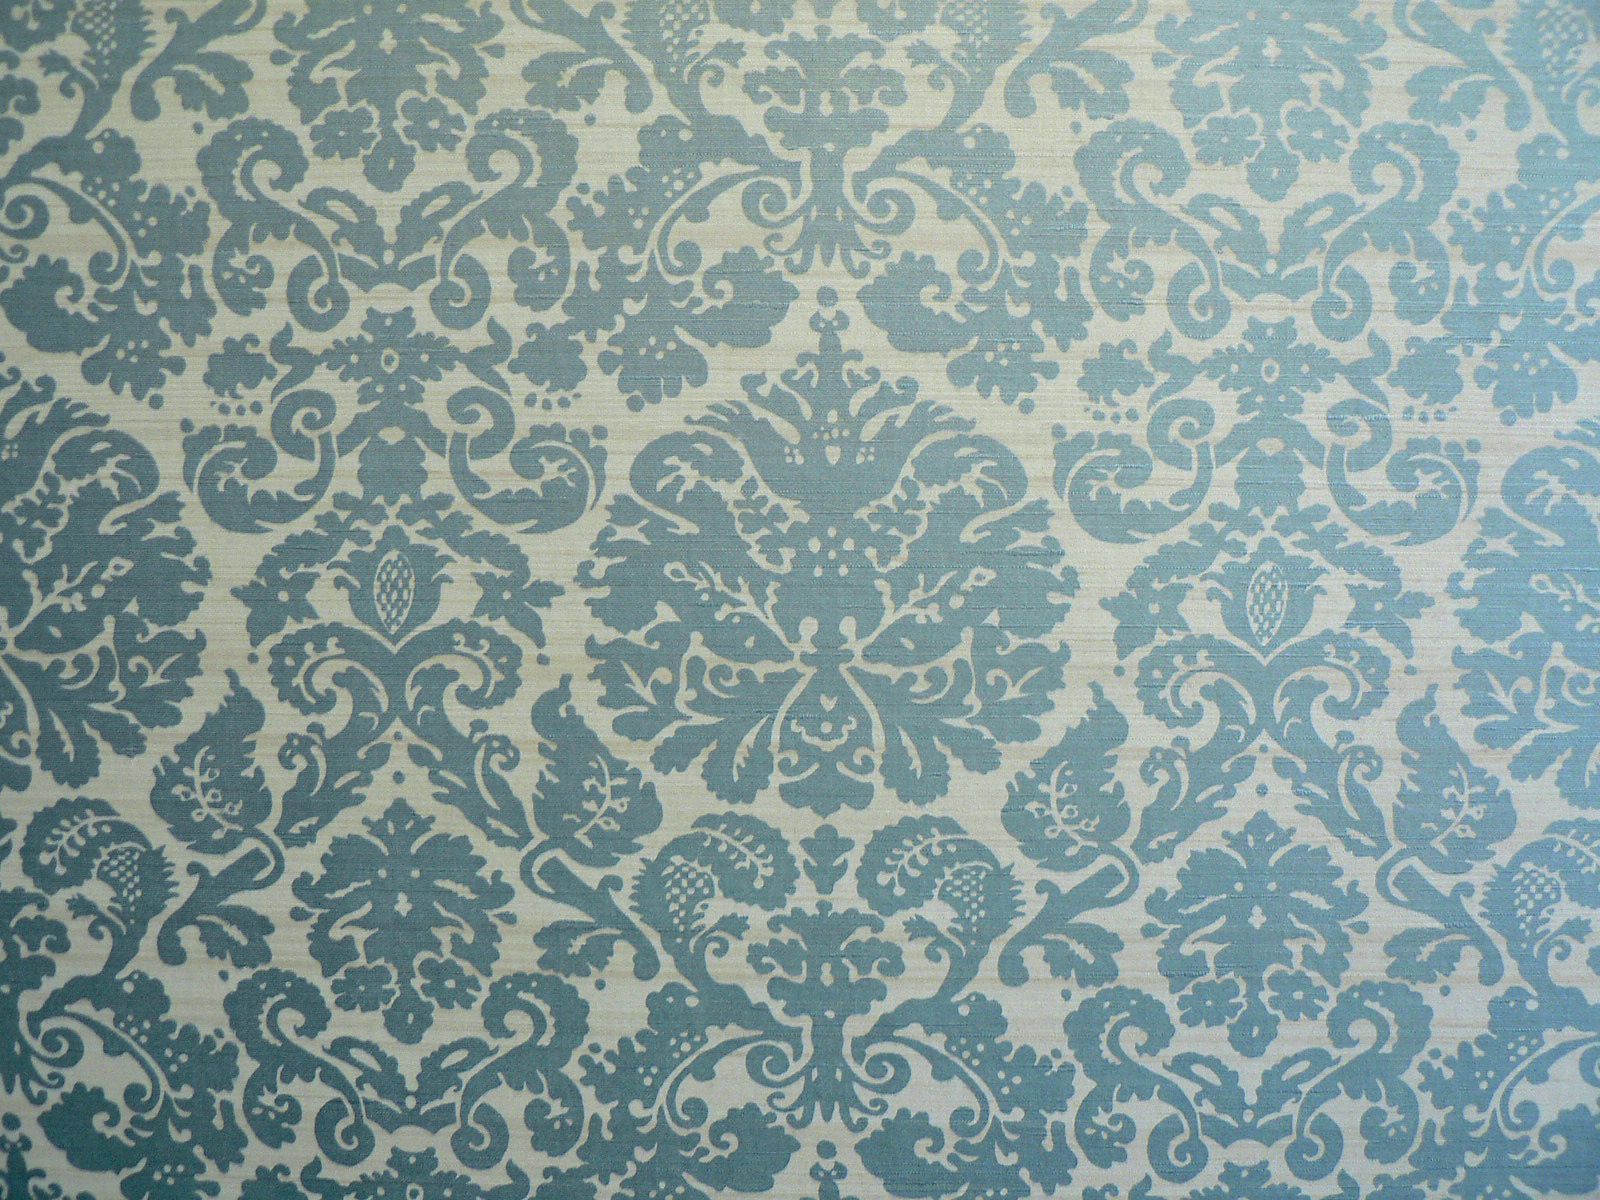 patterns-textures-wallpapers.jpg